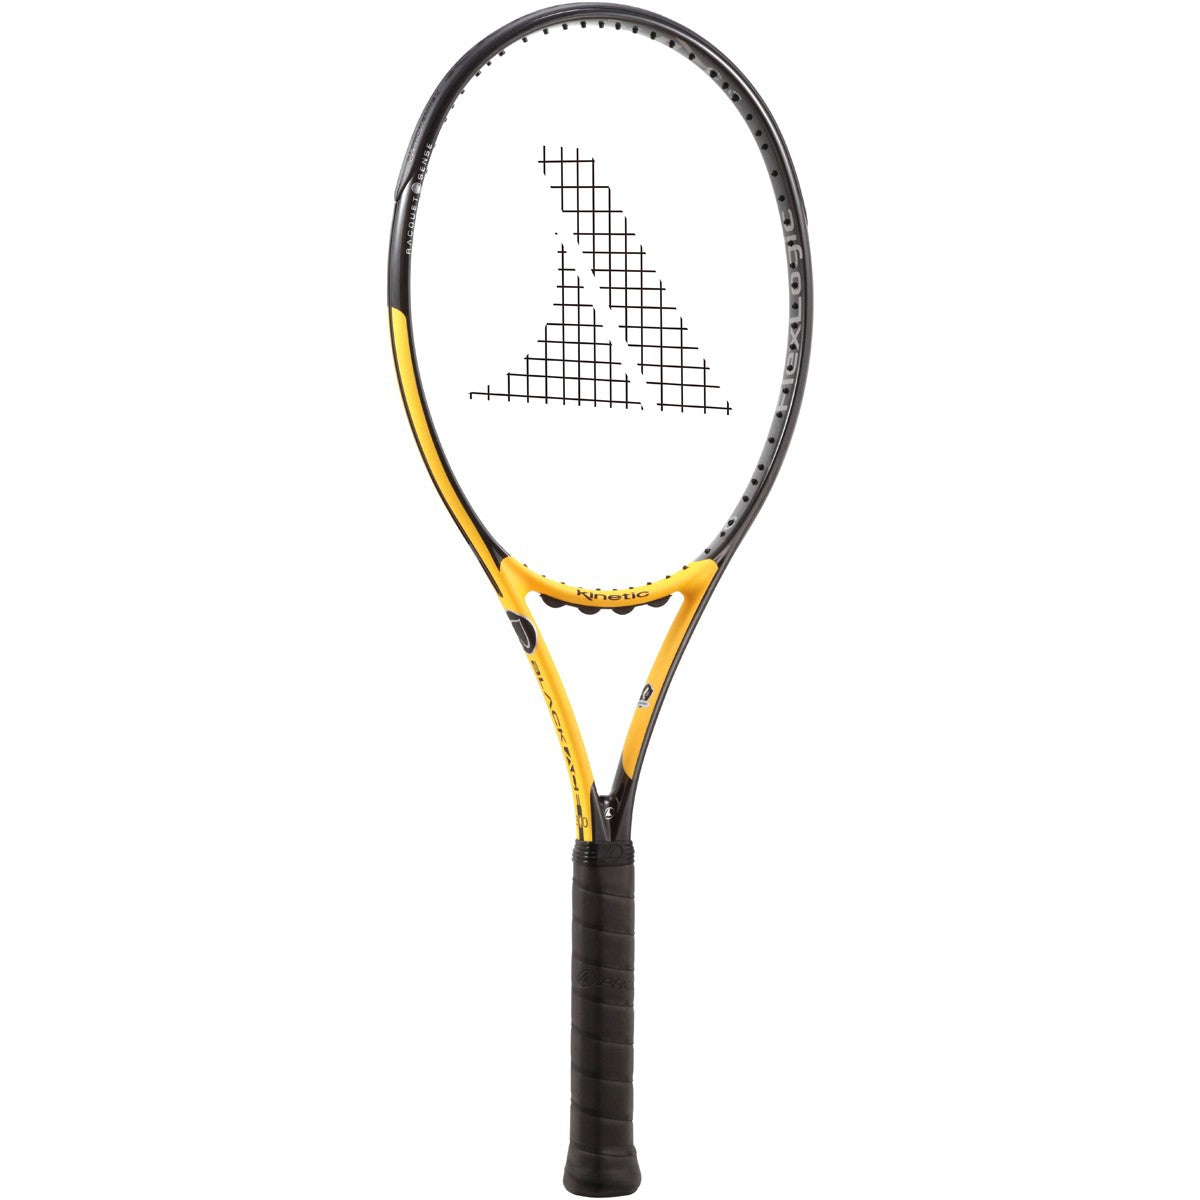 Pro Kennex Black Ace 315g Tennis Racket